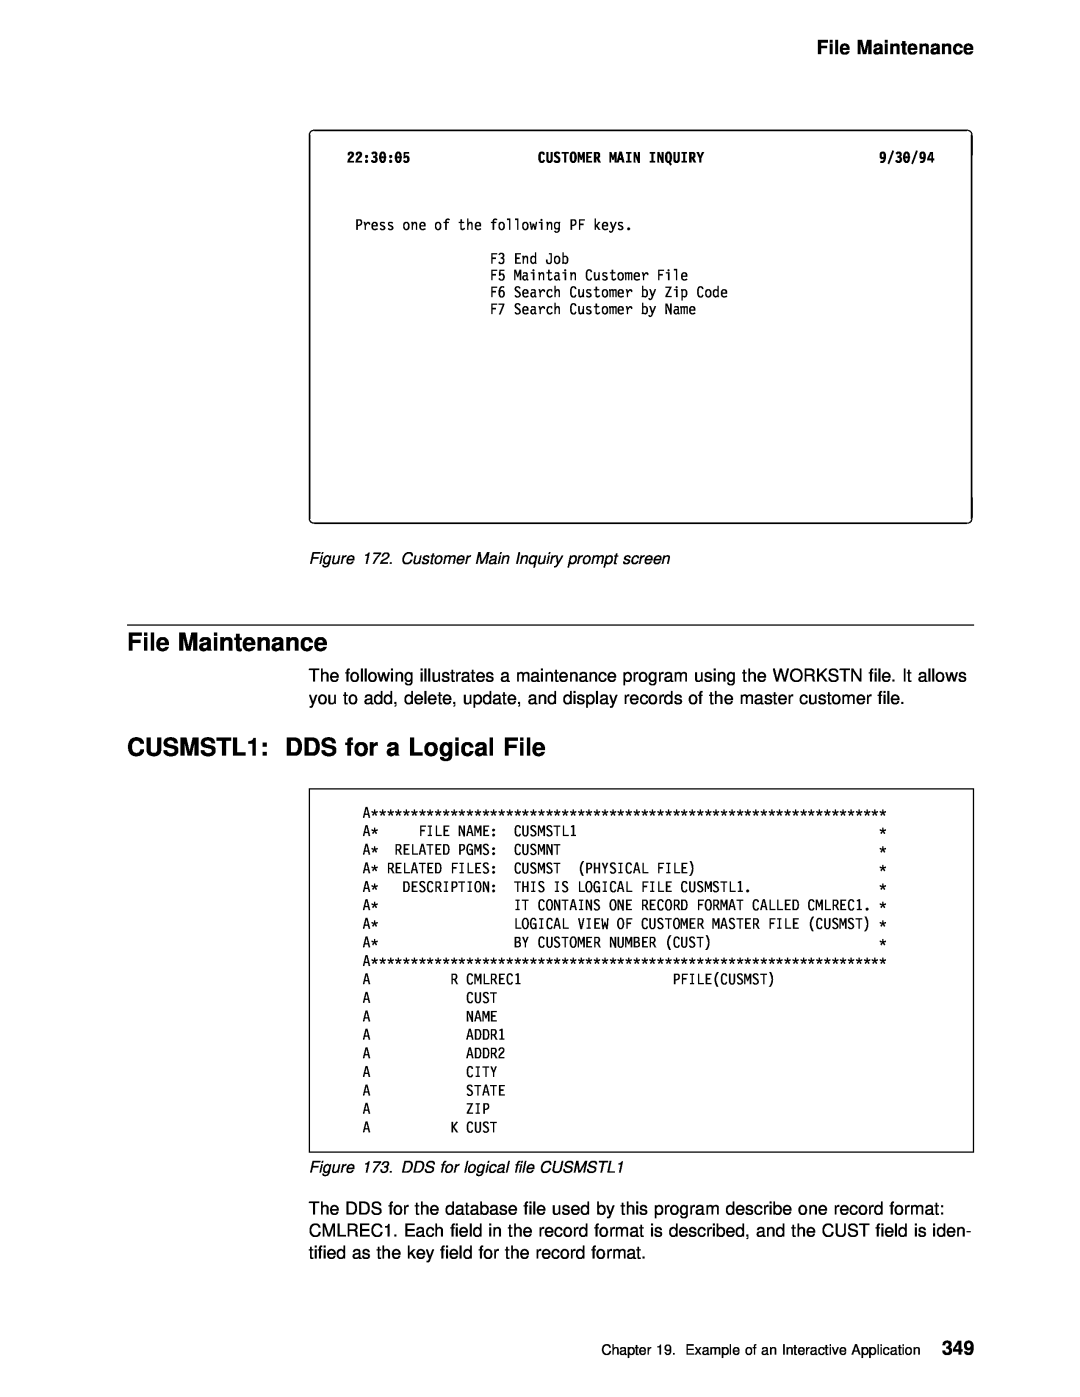 IBM AS/400 manual File Maintenance, CUSMSTL1 DDS for a, Logical 